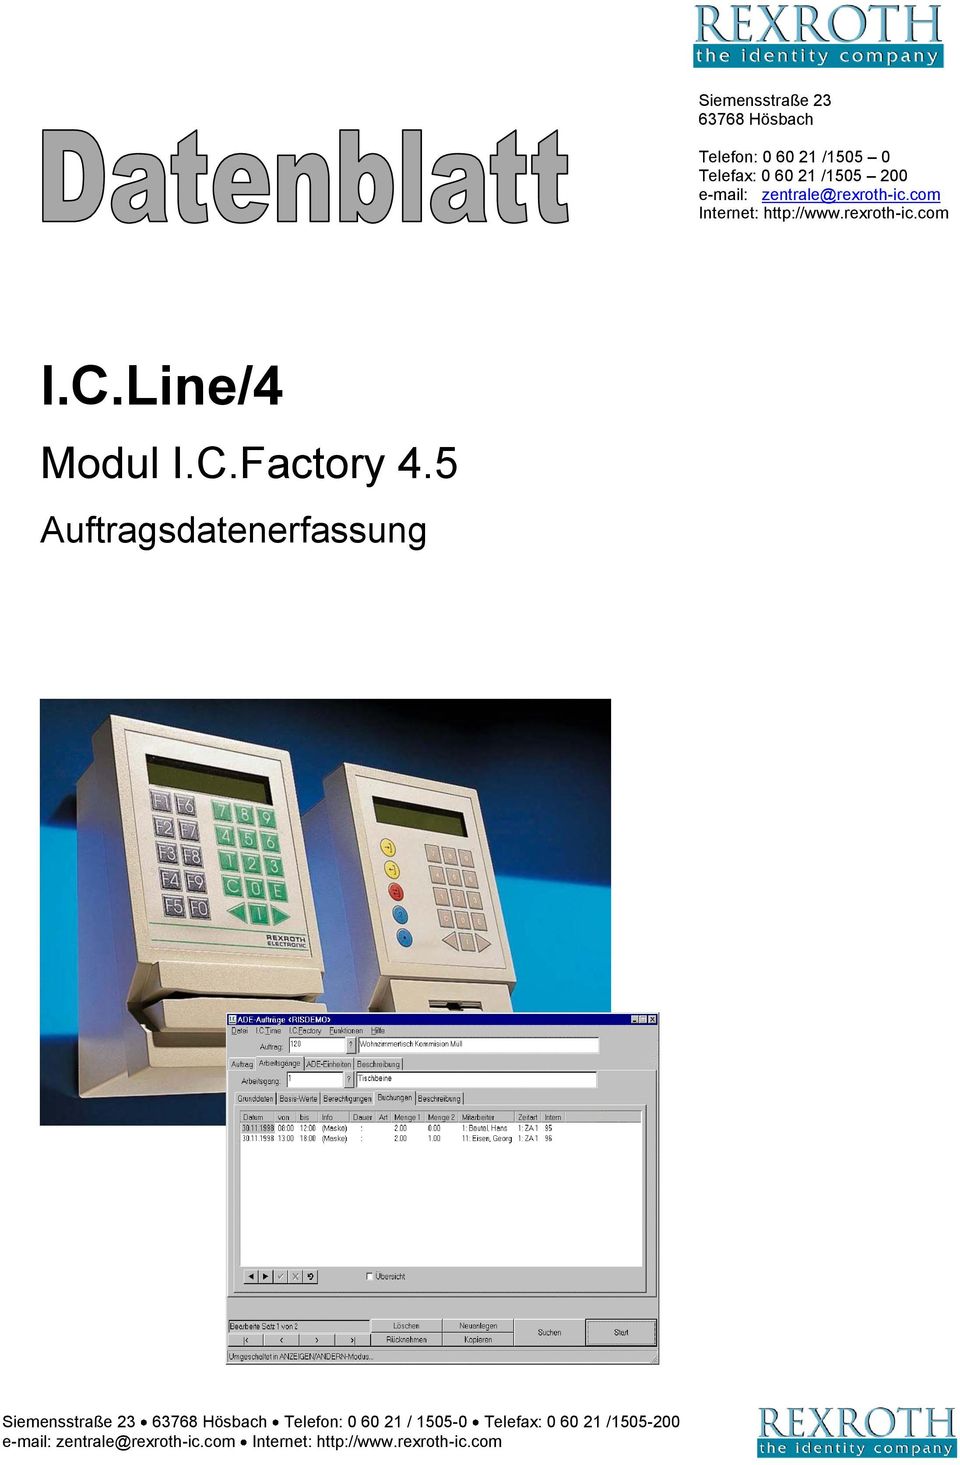 rexroth-ic.com I.C.Line/4 Modul I.C.Factory 4.